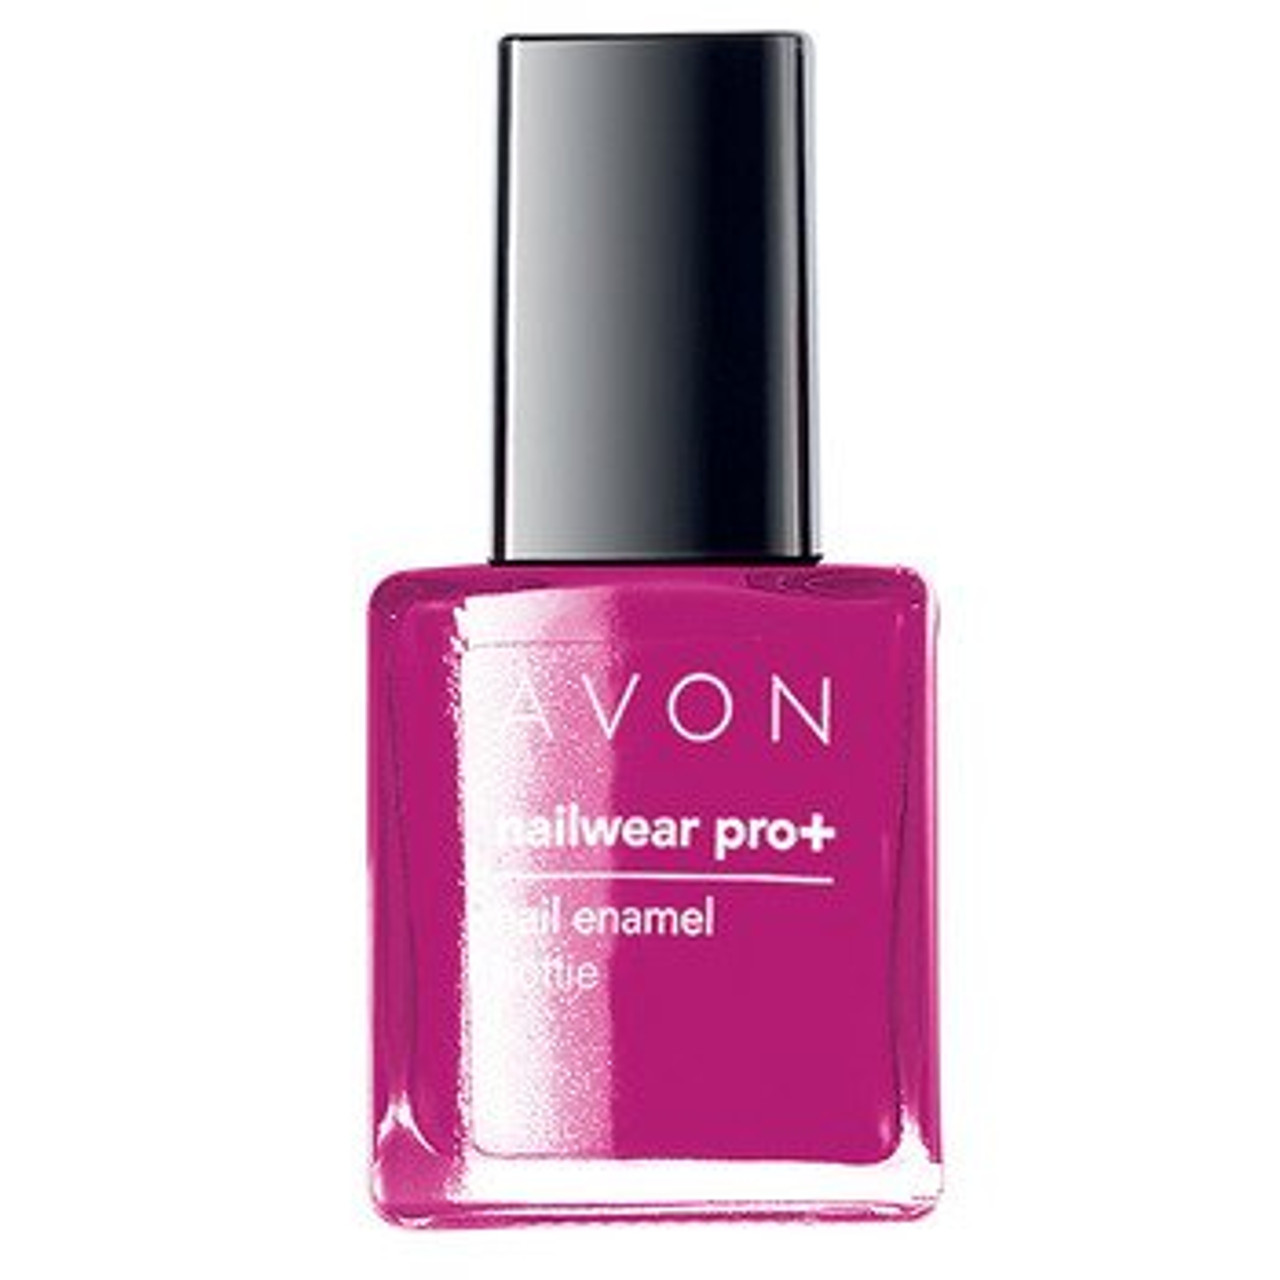 Avon Nailwear Pro Nail Enamel in Olive Green | Nails, Avon, Nail polish